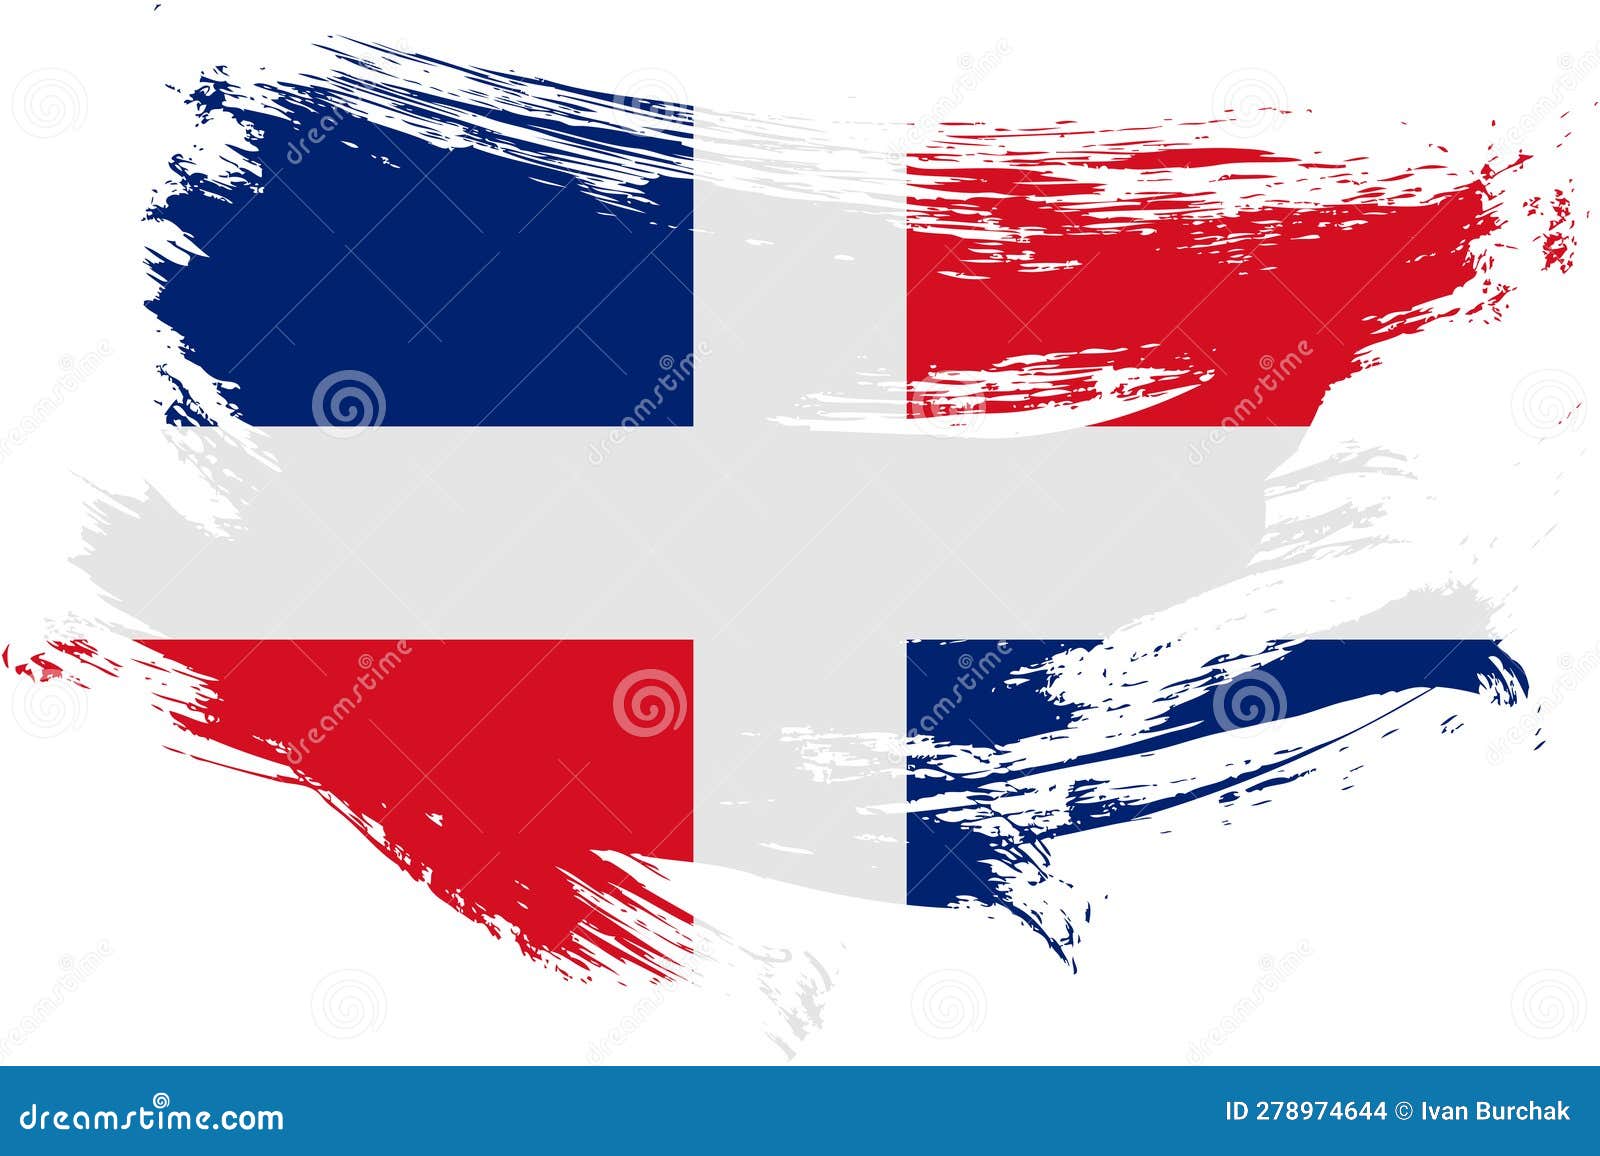 dominican republic brush stroke flag  background. hand drawn grunge style republica dominicana  banner